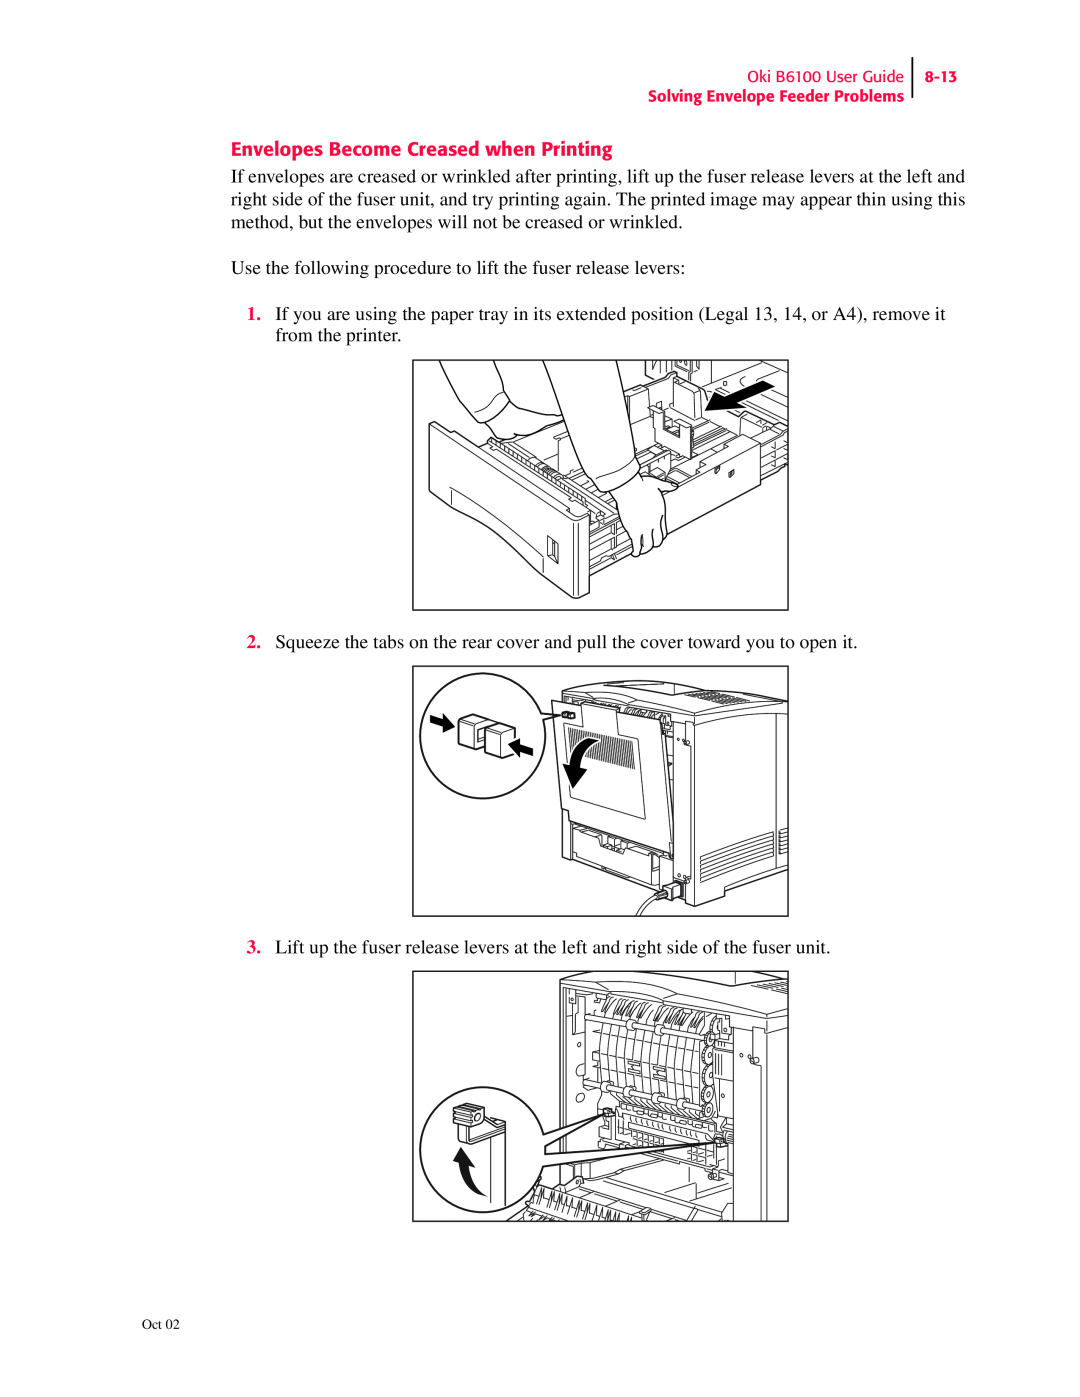 Oki manual Envelopes Become Creased when Printing, Oki B6100 User Guide Solving Envelope Feeder Problems, 8-13 